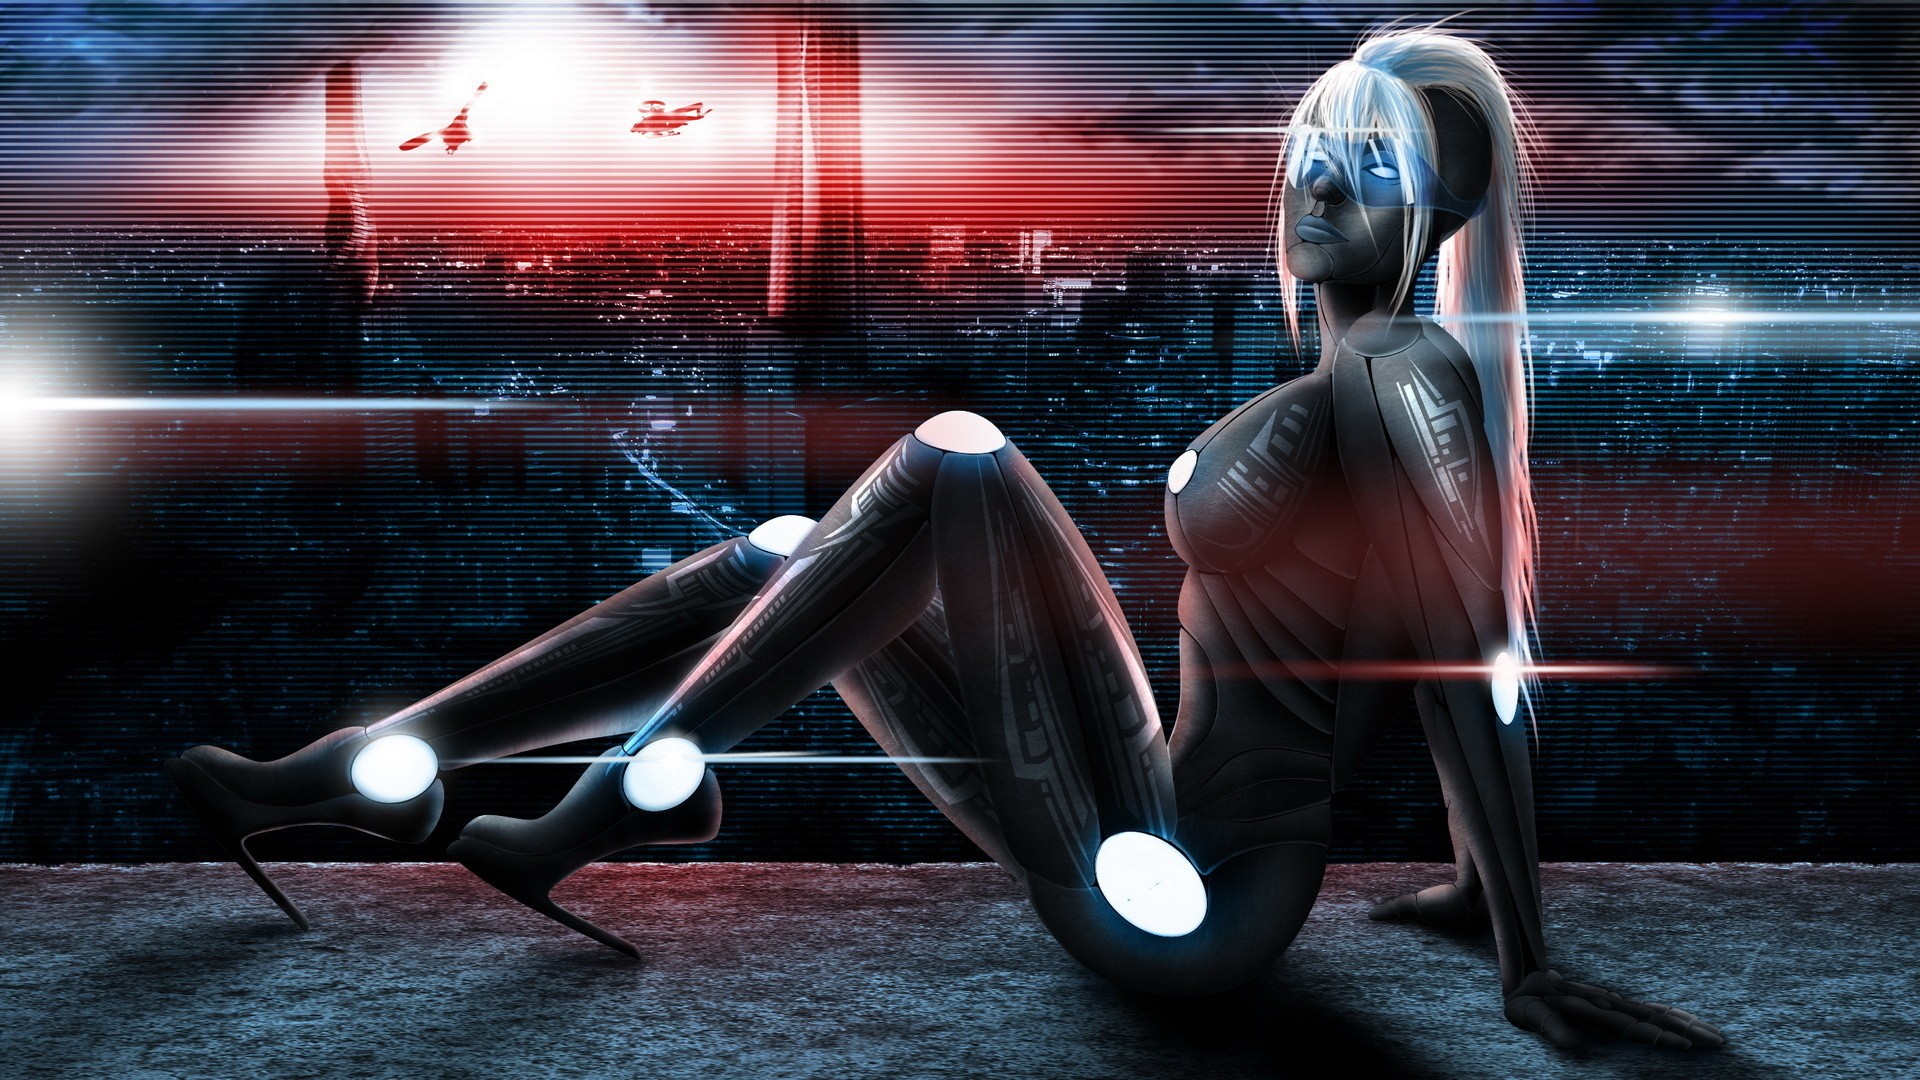 General 1920x1080 robot women artwork sunglasses high heels Gynoid machine cyborg science fiction science fiction women digital art